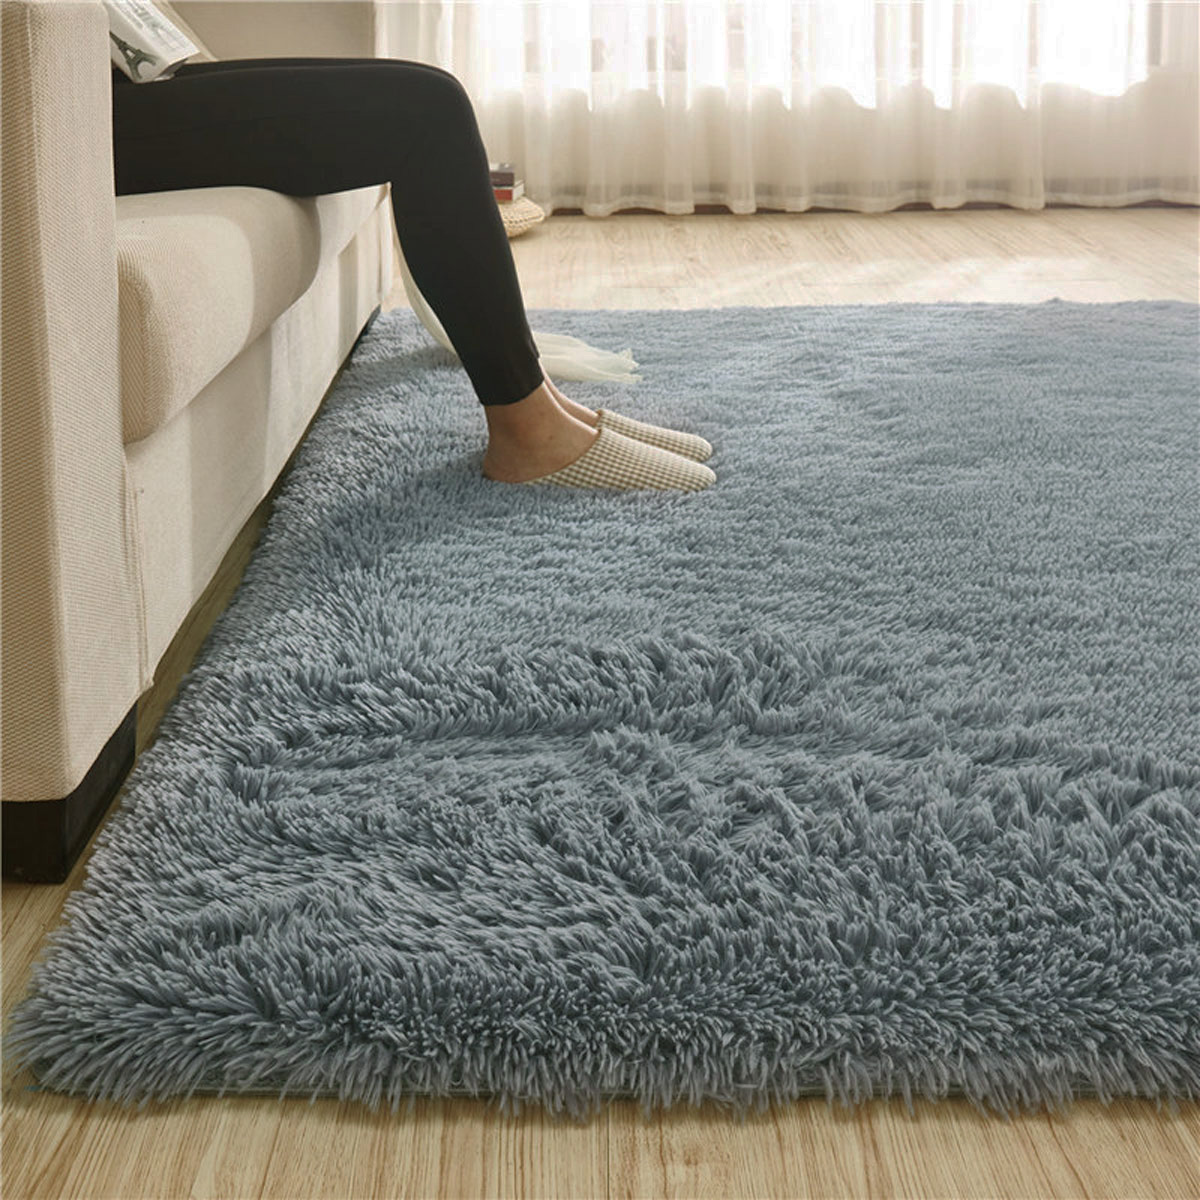 110x160-Fluffy-Rugs-Modern-Shaggy-Area-Rug-Room-Home-Bedroom-Carpet-Floor-Mat-Yoga-Mats-1560268-3